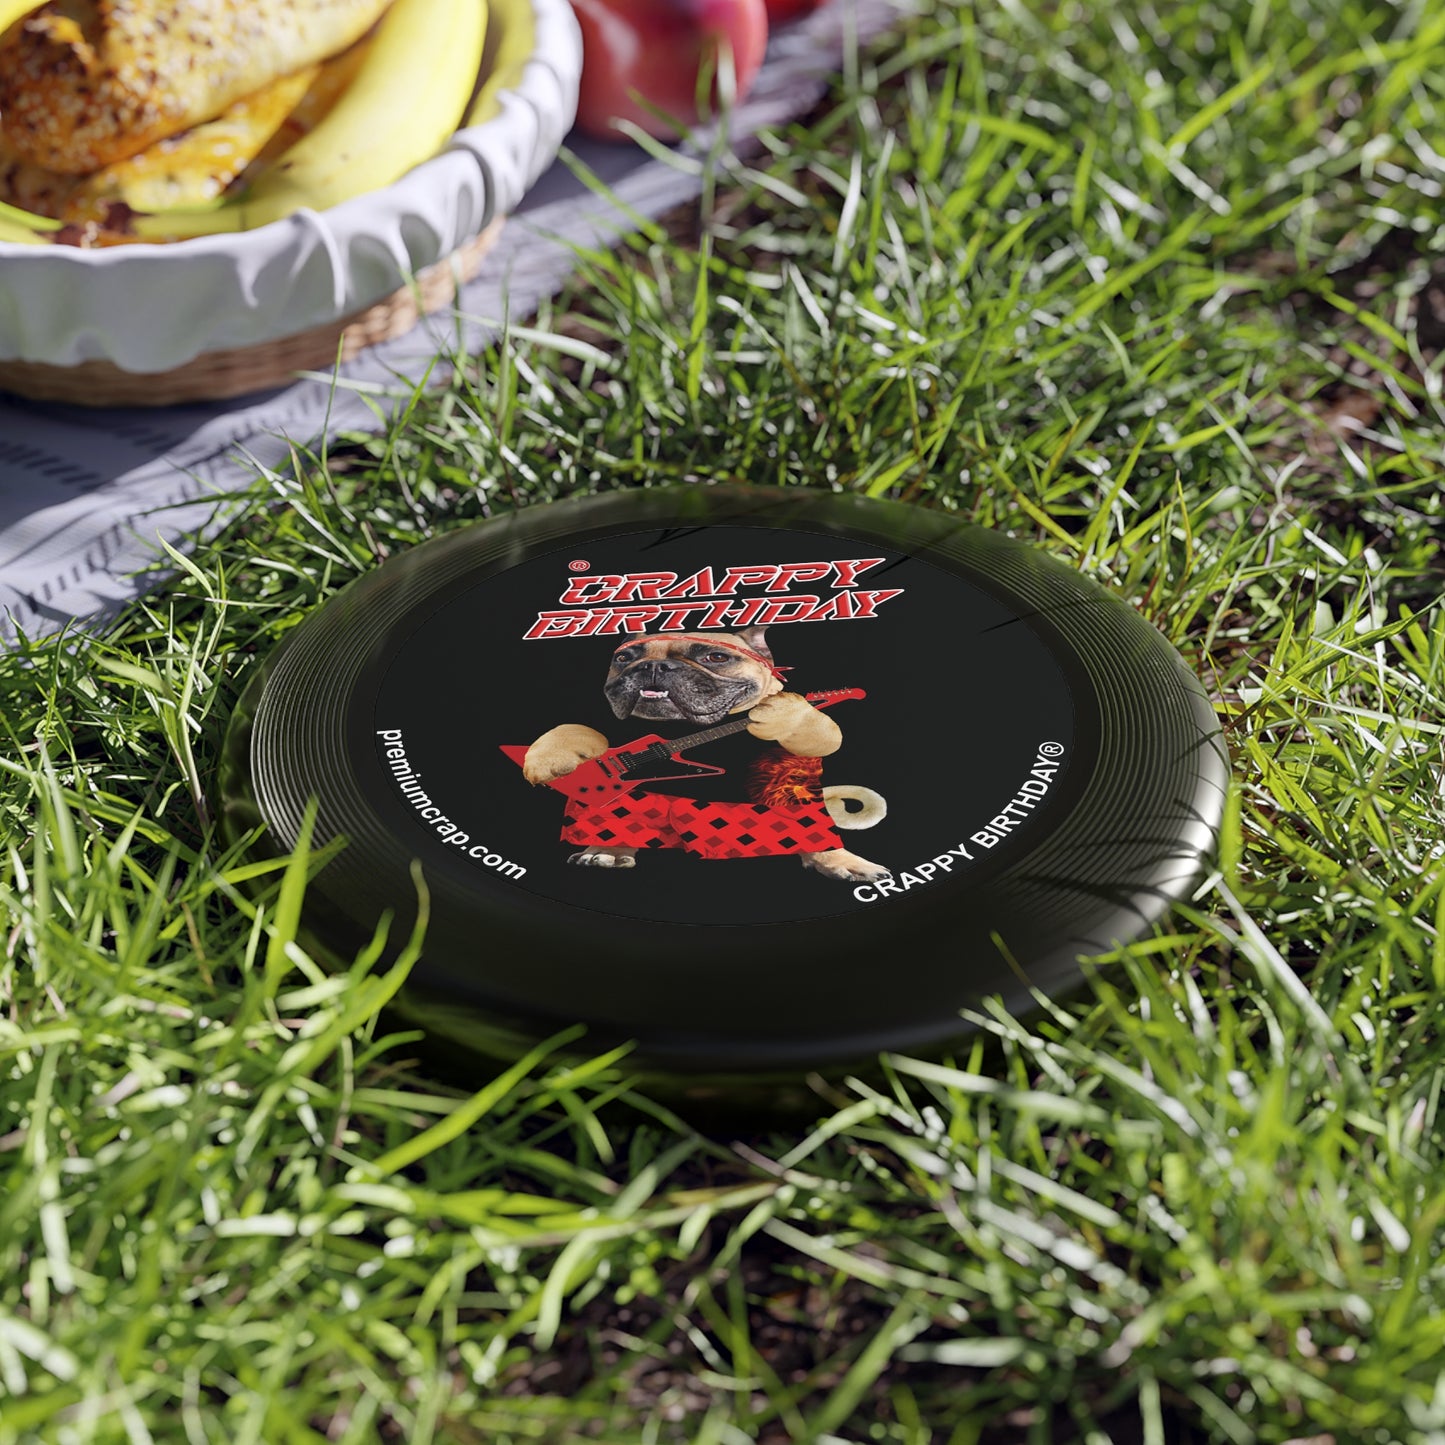 Crappy Birthday II Wham-O Frisbee